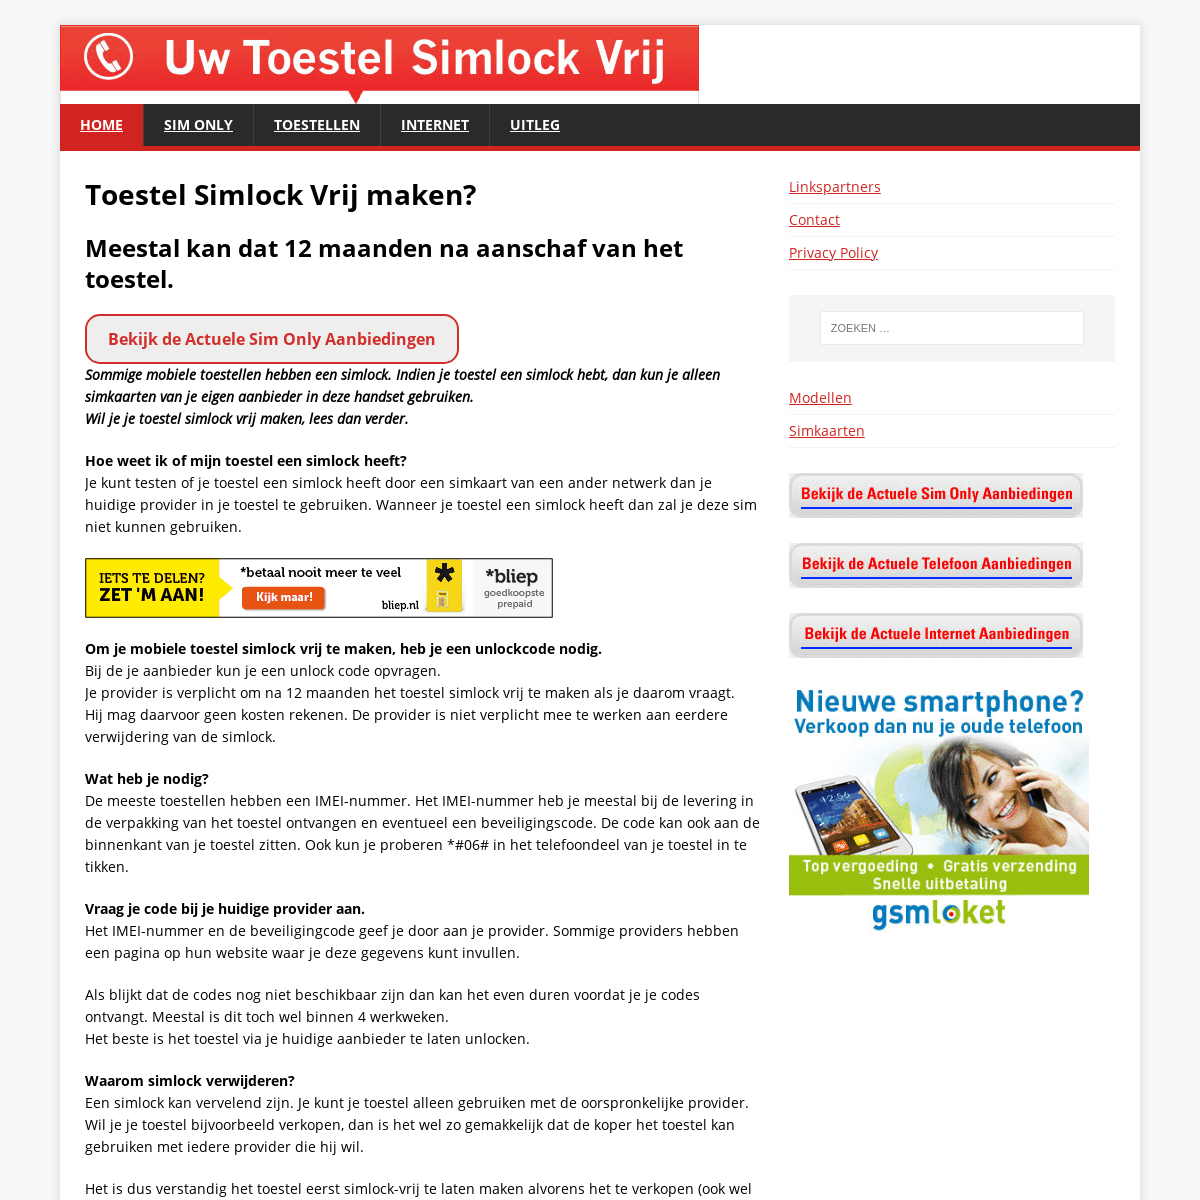 A complete backup of https://toestelsimlockvrij.nl